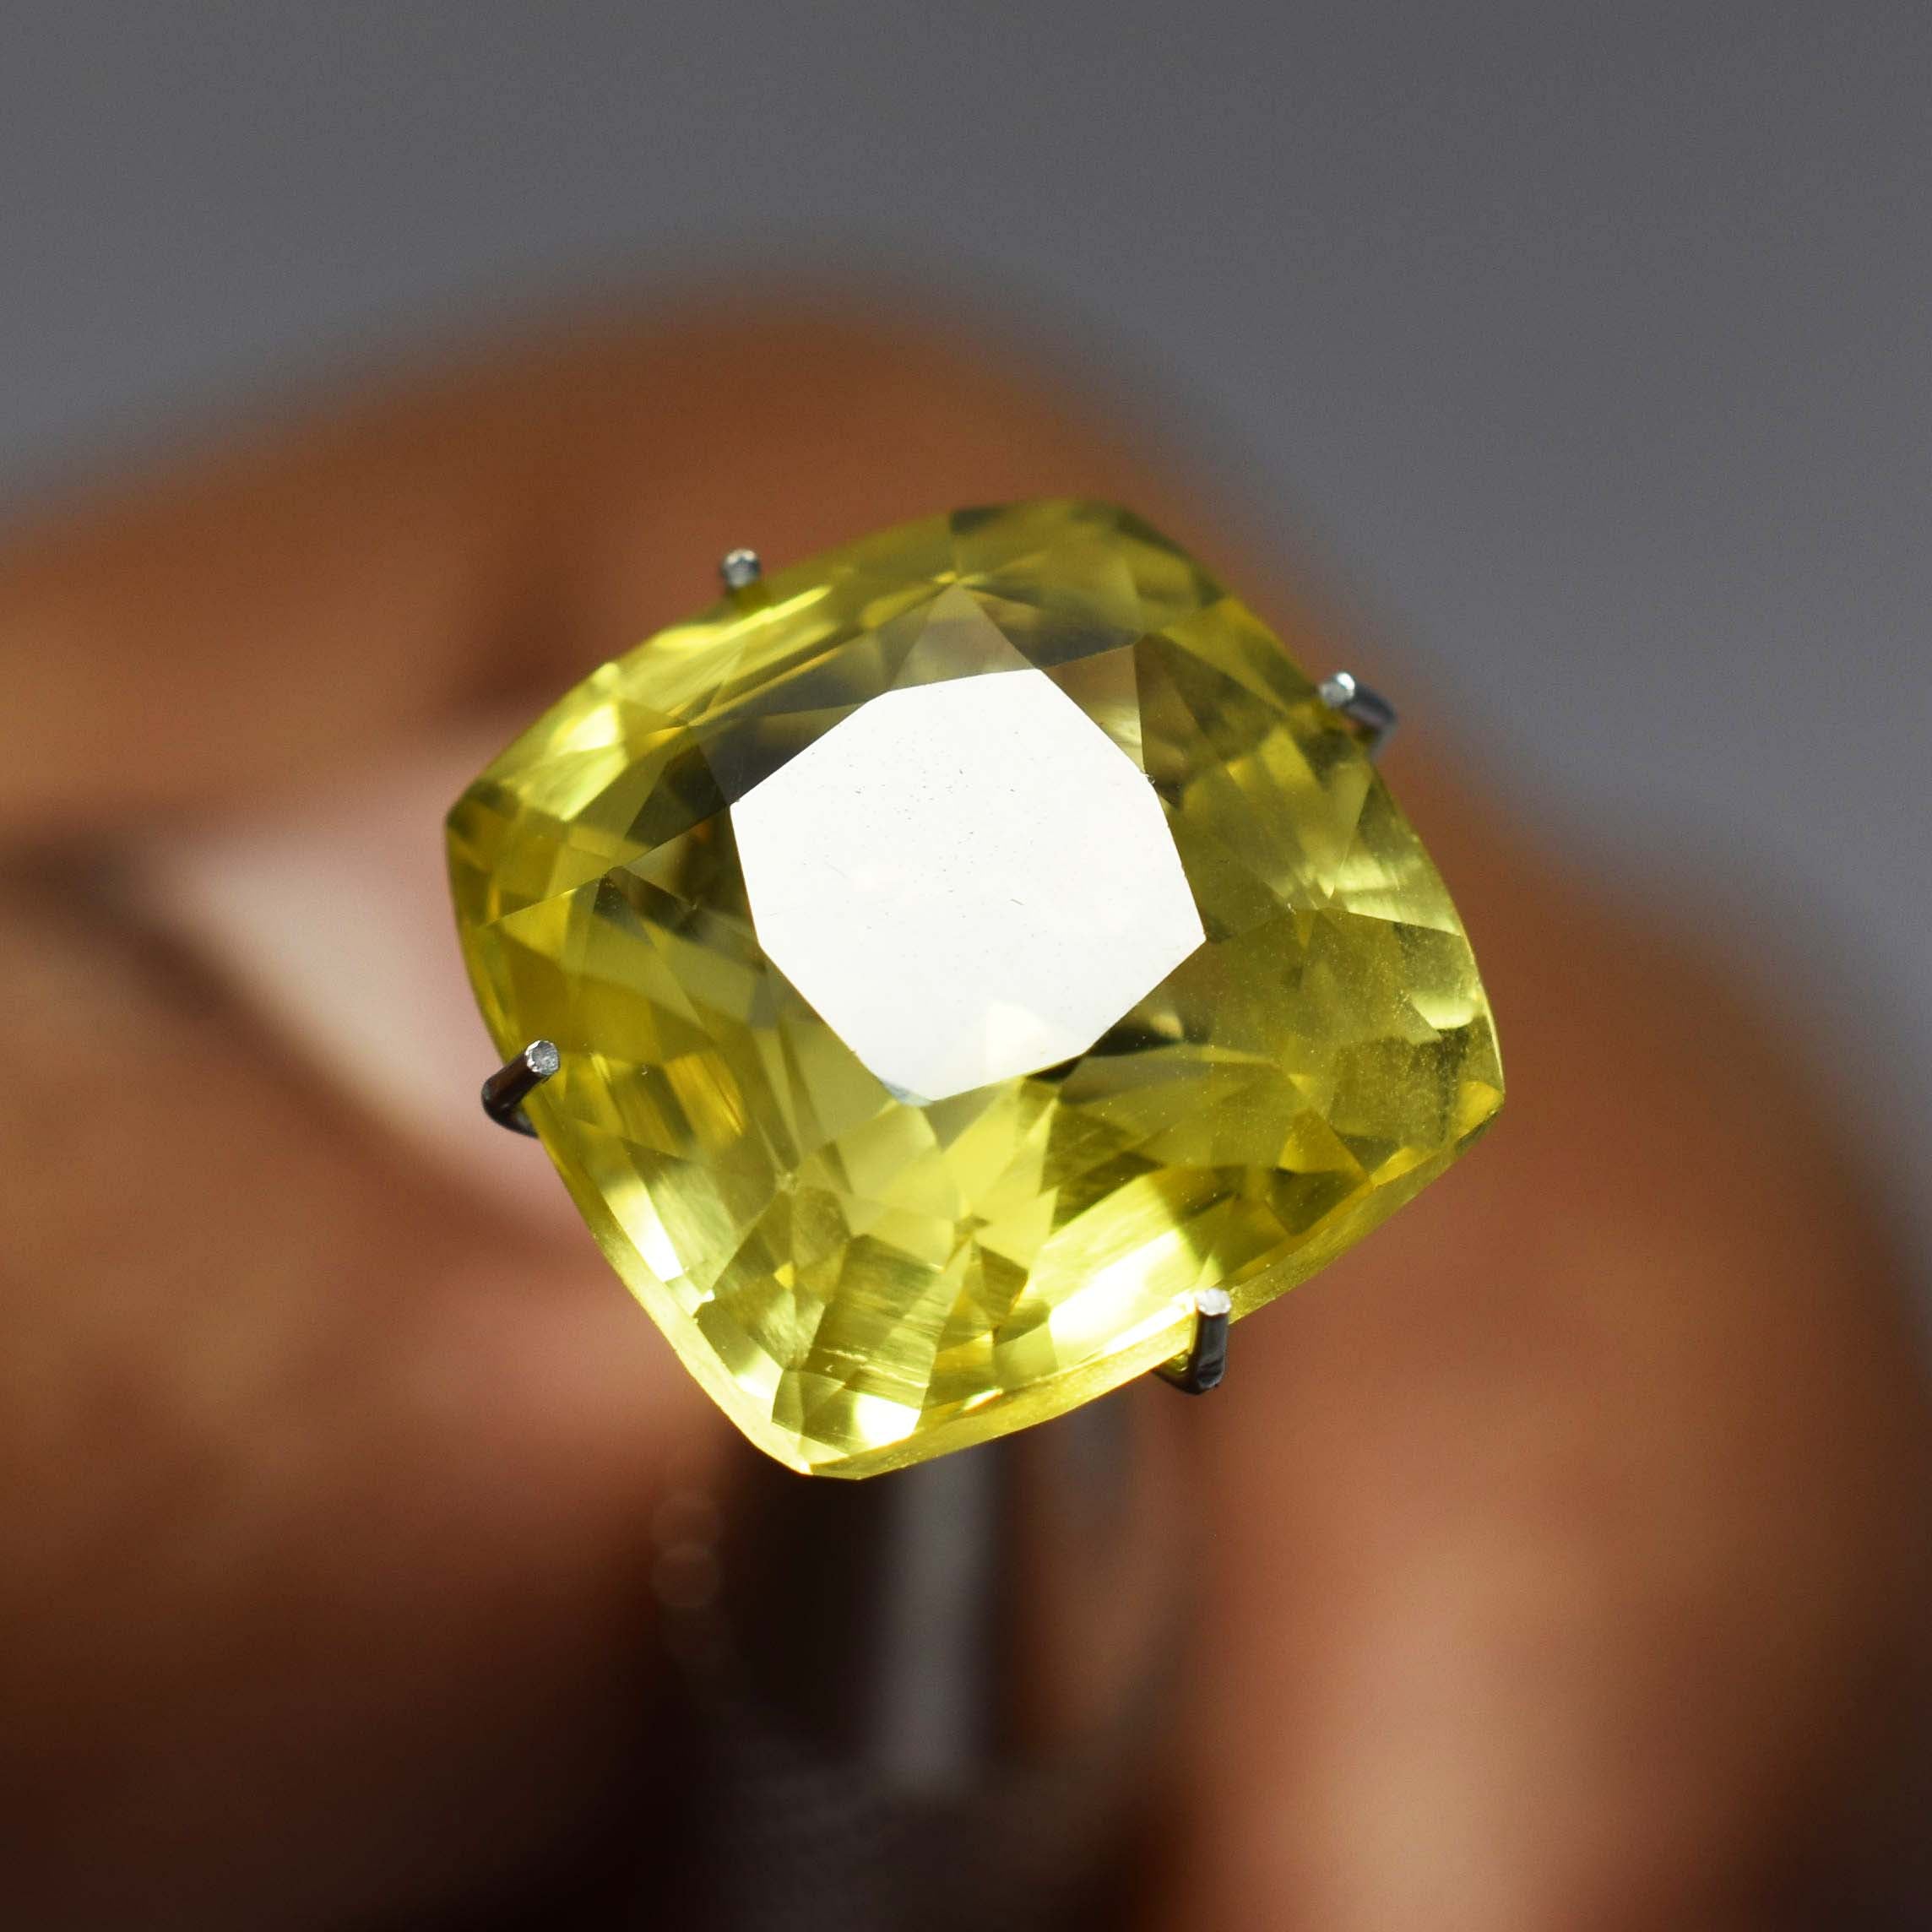 Yellow Sapphire Rare Square Cushion Cut 8.85 Ct CERTIFIED Loose Gemstone Natural Genuine YELLOW Sapphire